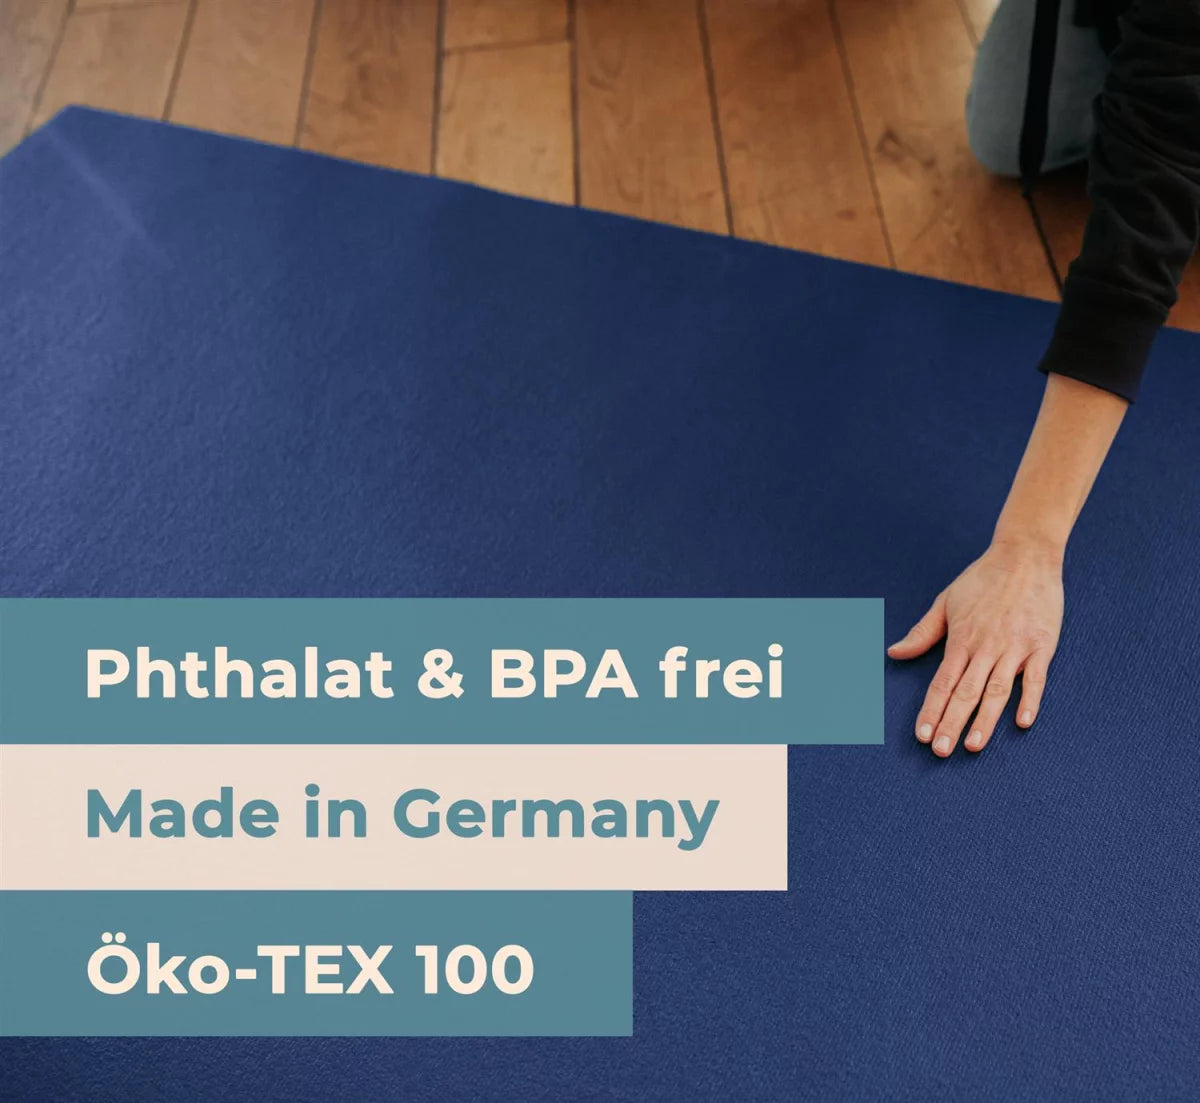 Runde Krabbelmatte Blau "made in Germany" - Öko-Tex 100